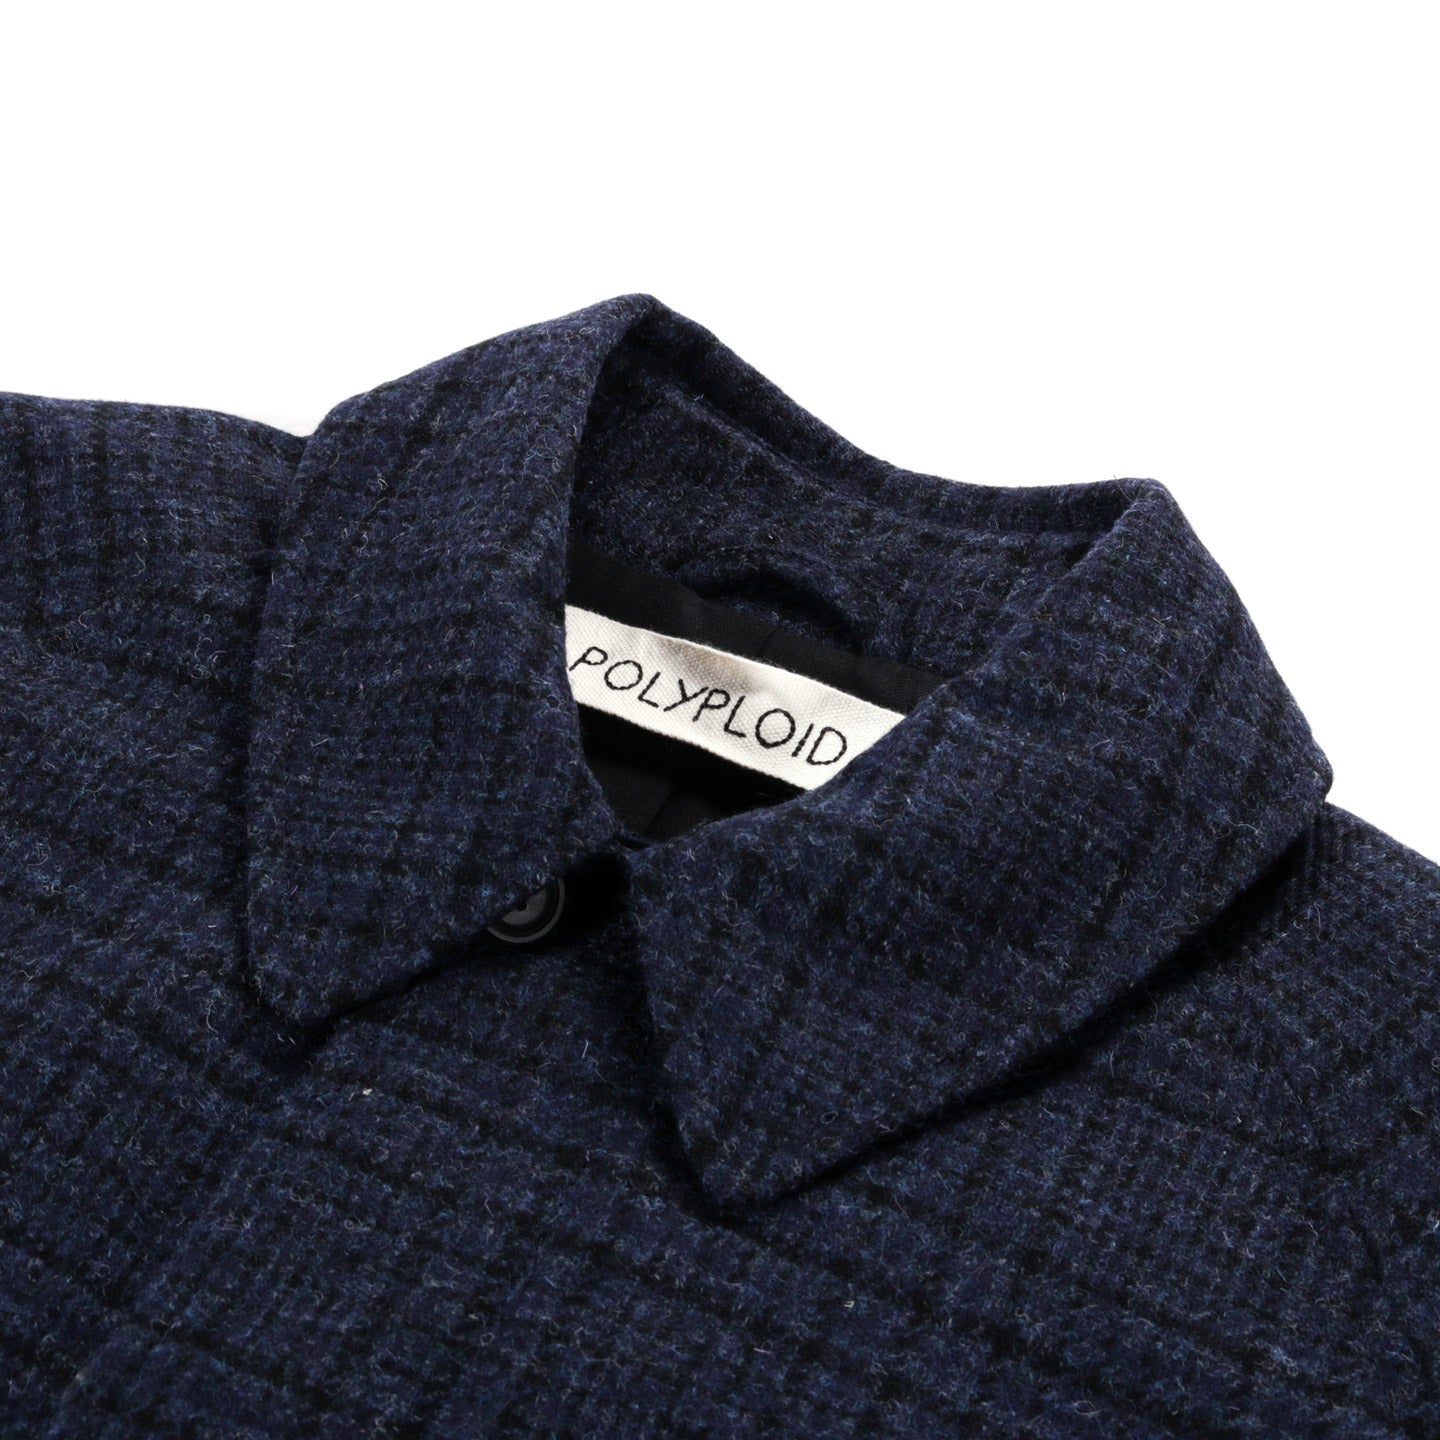 POLYPLOID LONG COAT B BLUE / GRAY MELANGE | TODAY CLOTHING